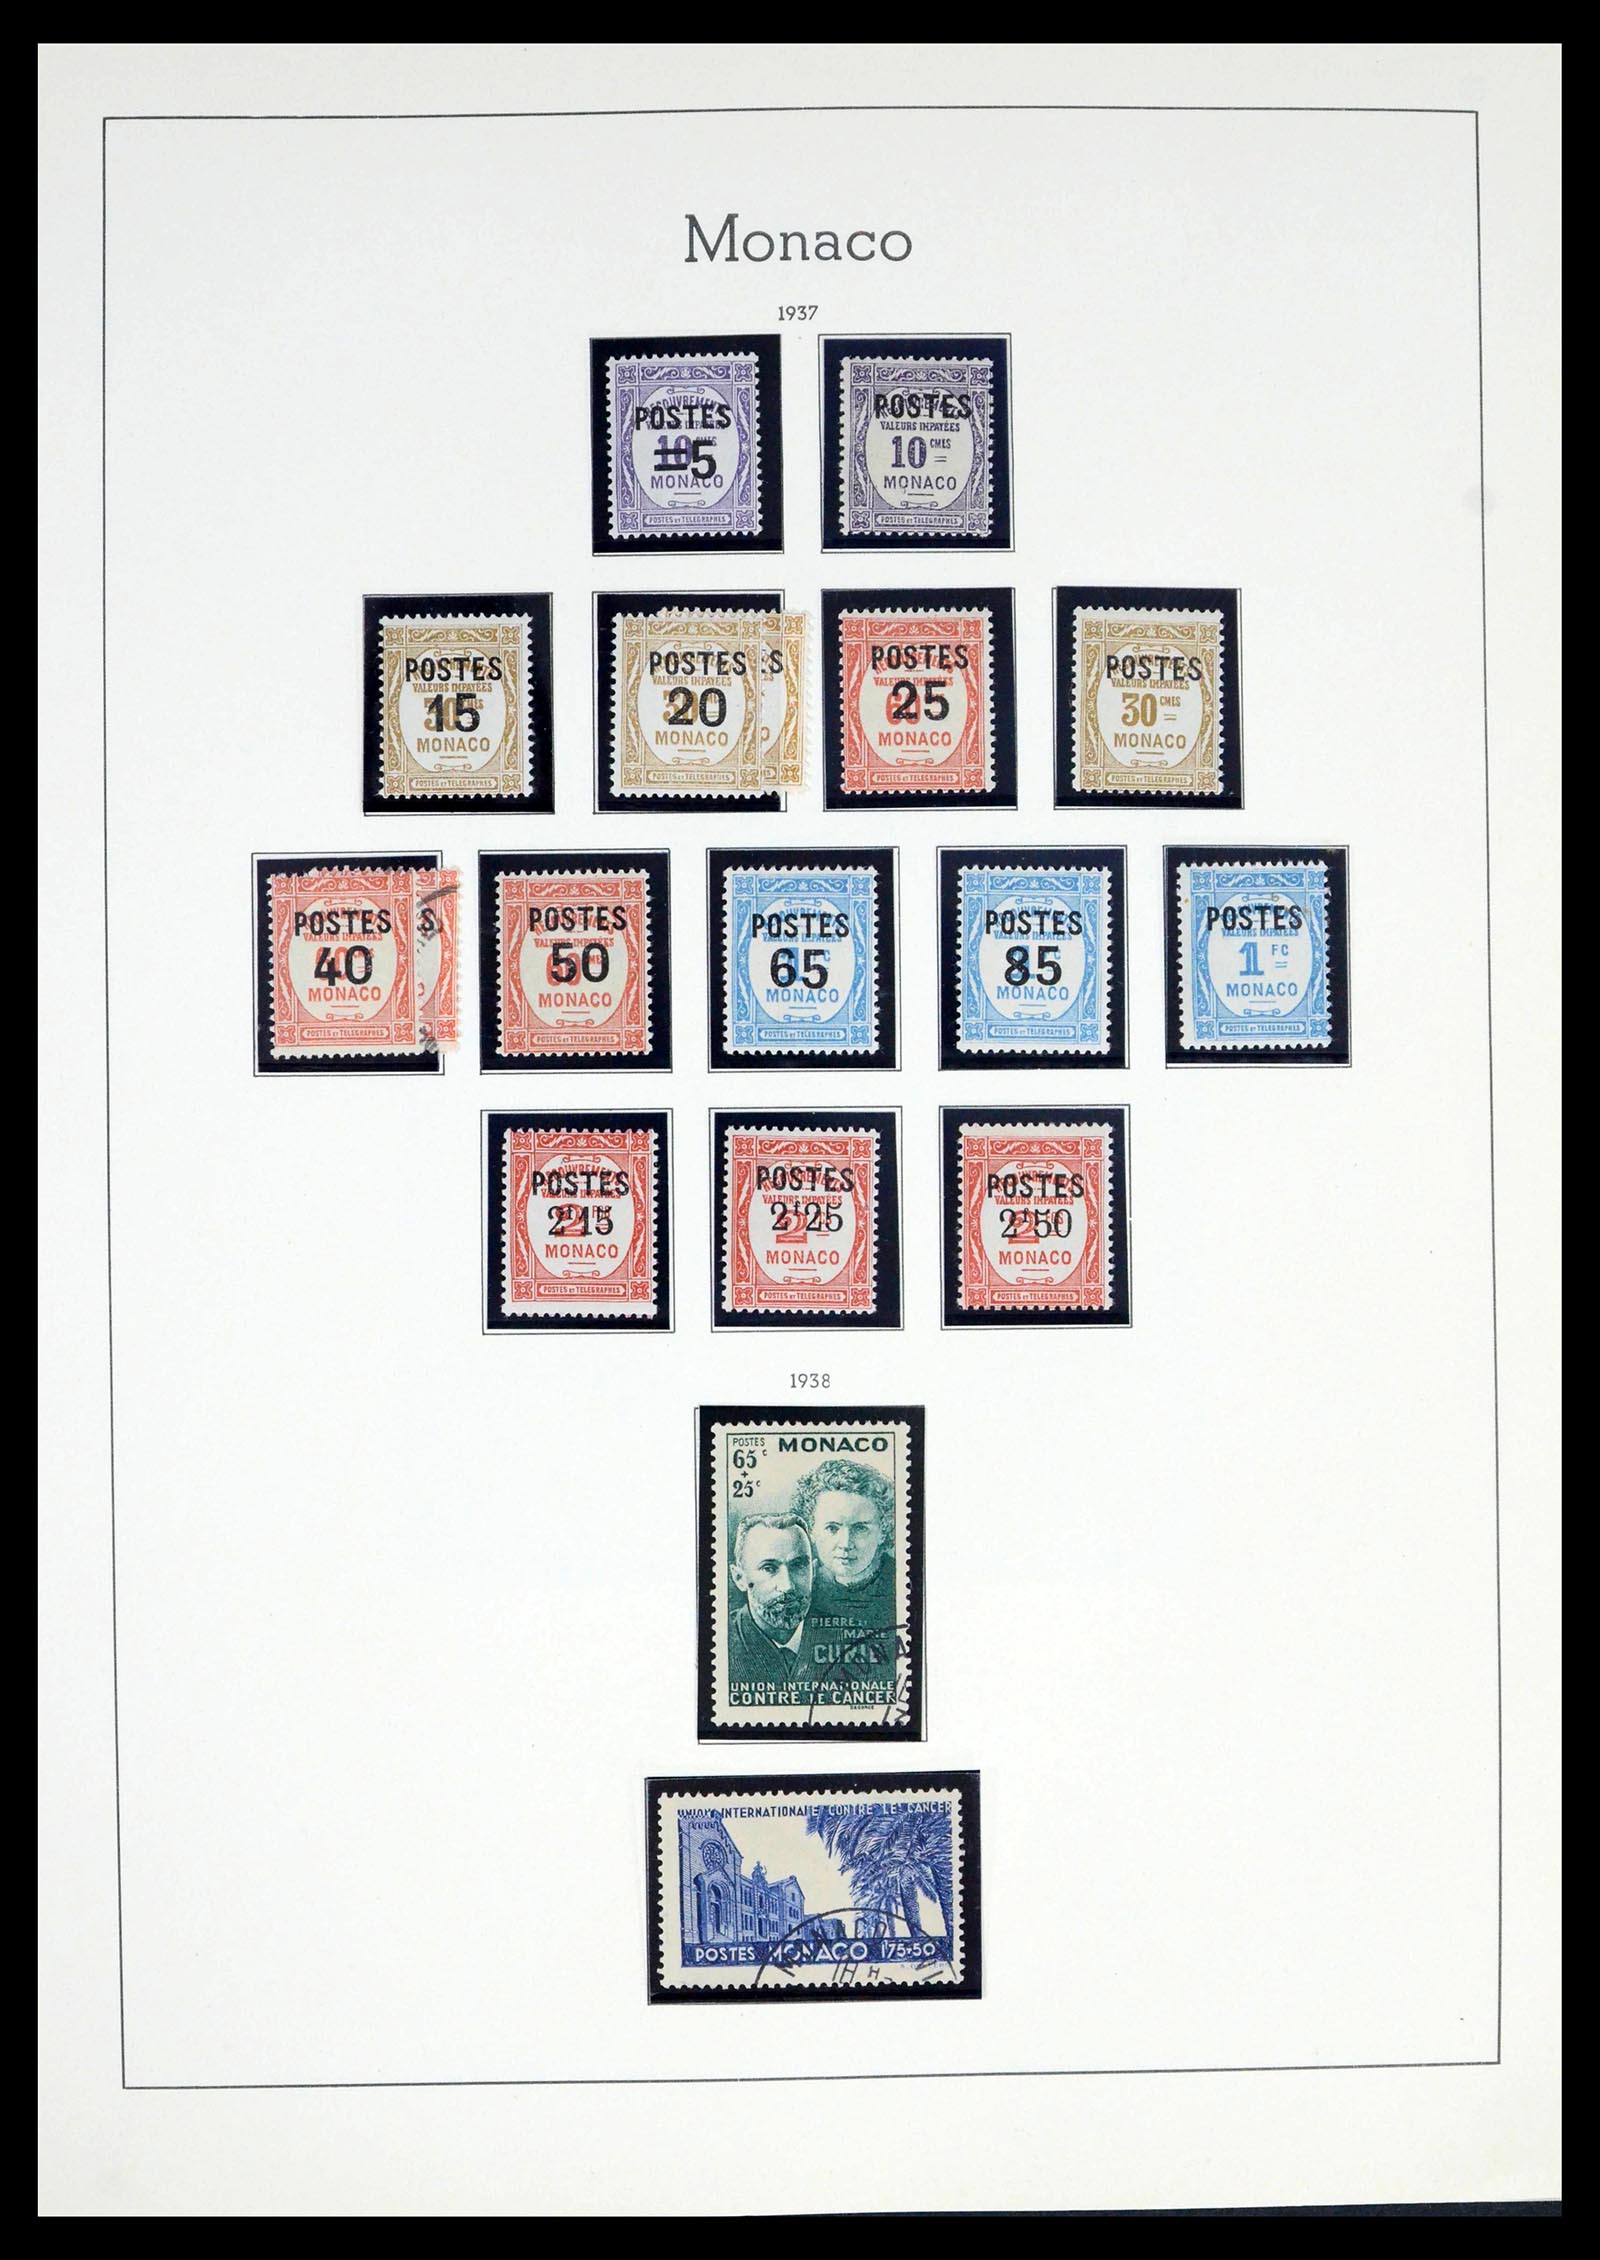 39392 0011 - Stamp collection 39392 Monaco 1885-1999.